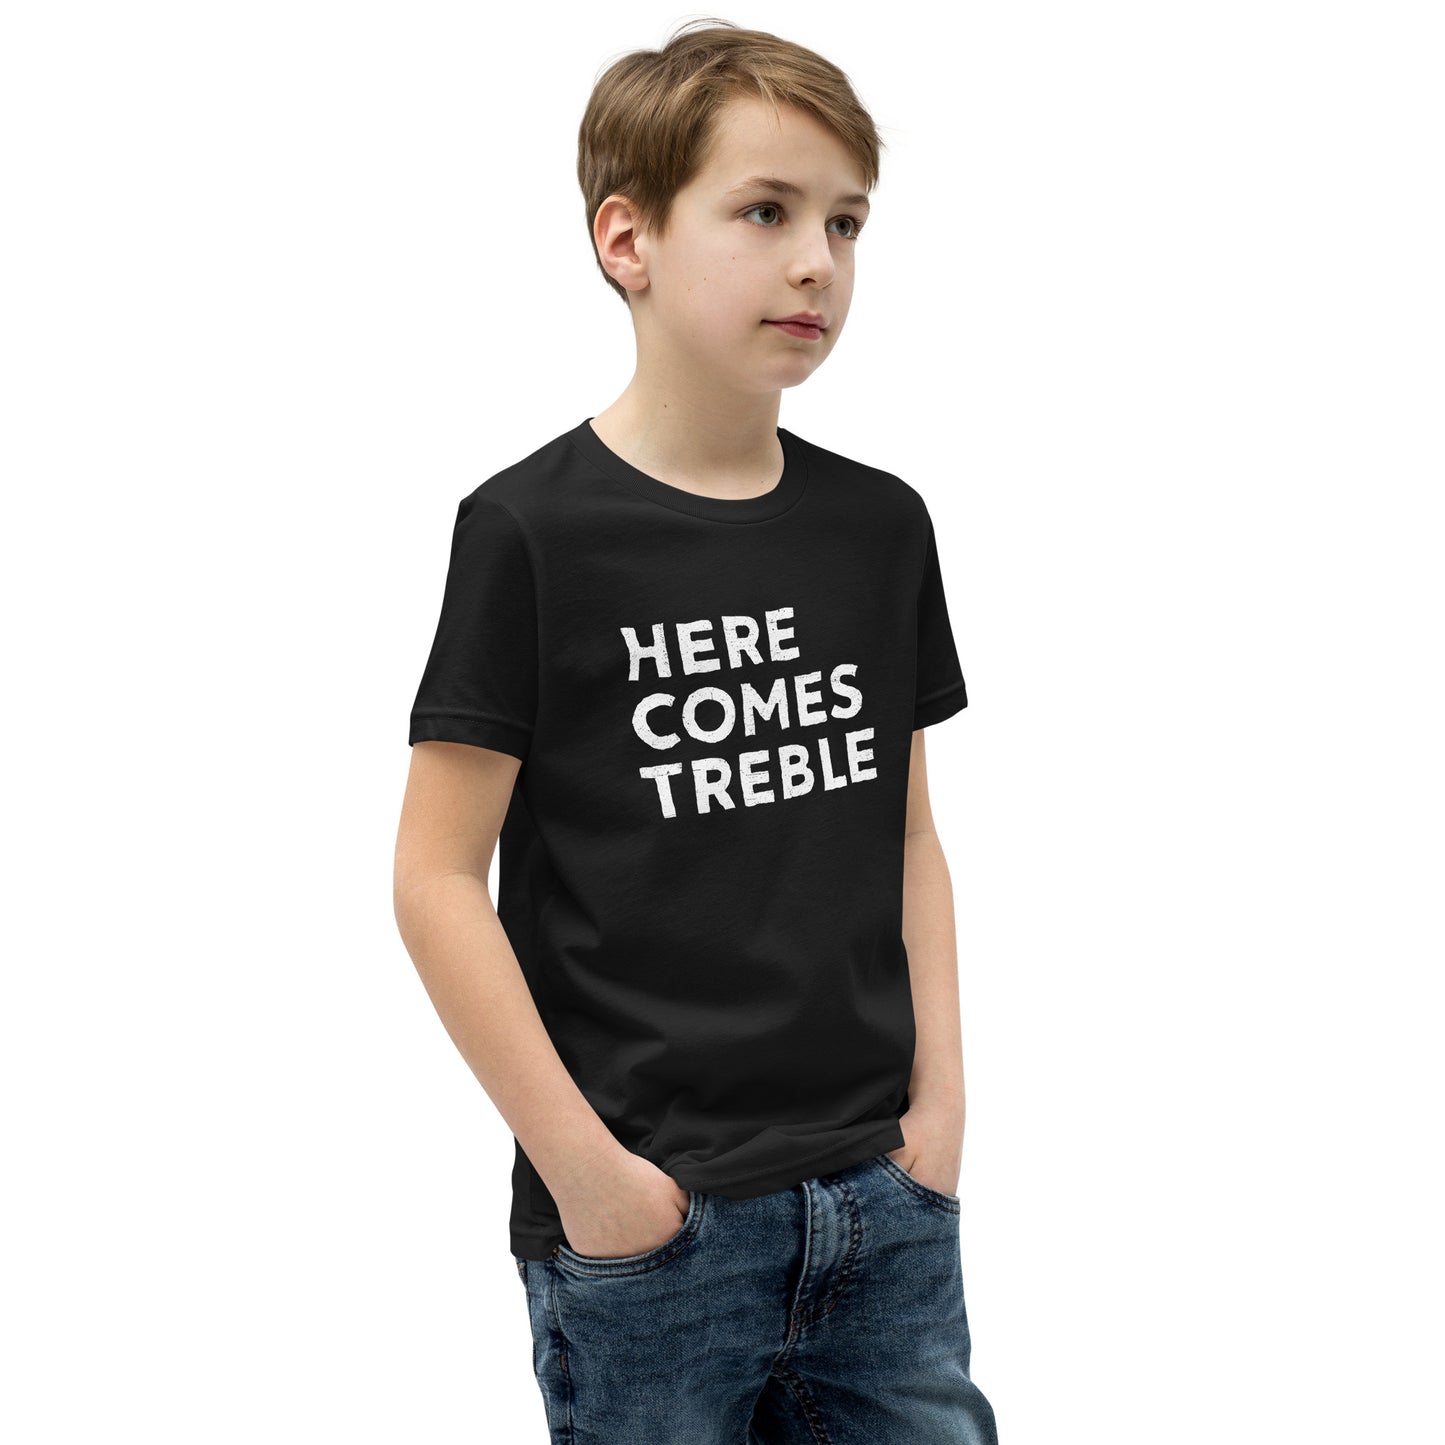 Here Comes Treble - Kids T-shirt